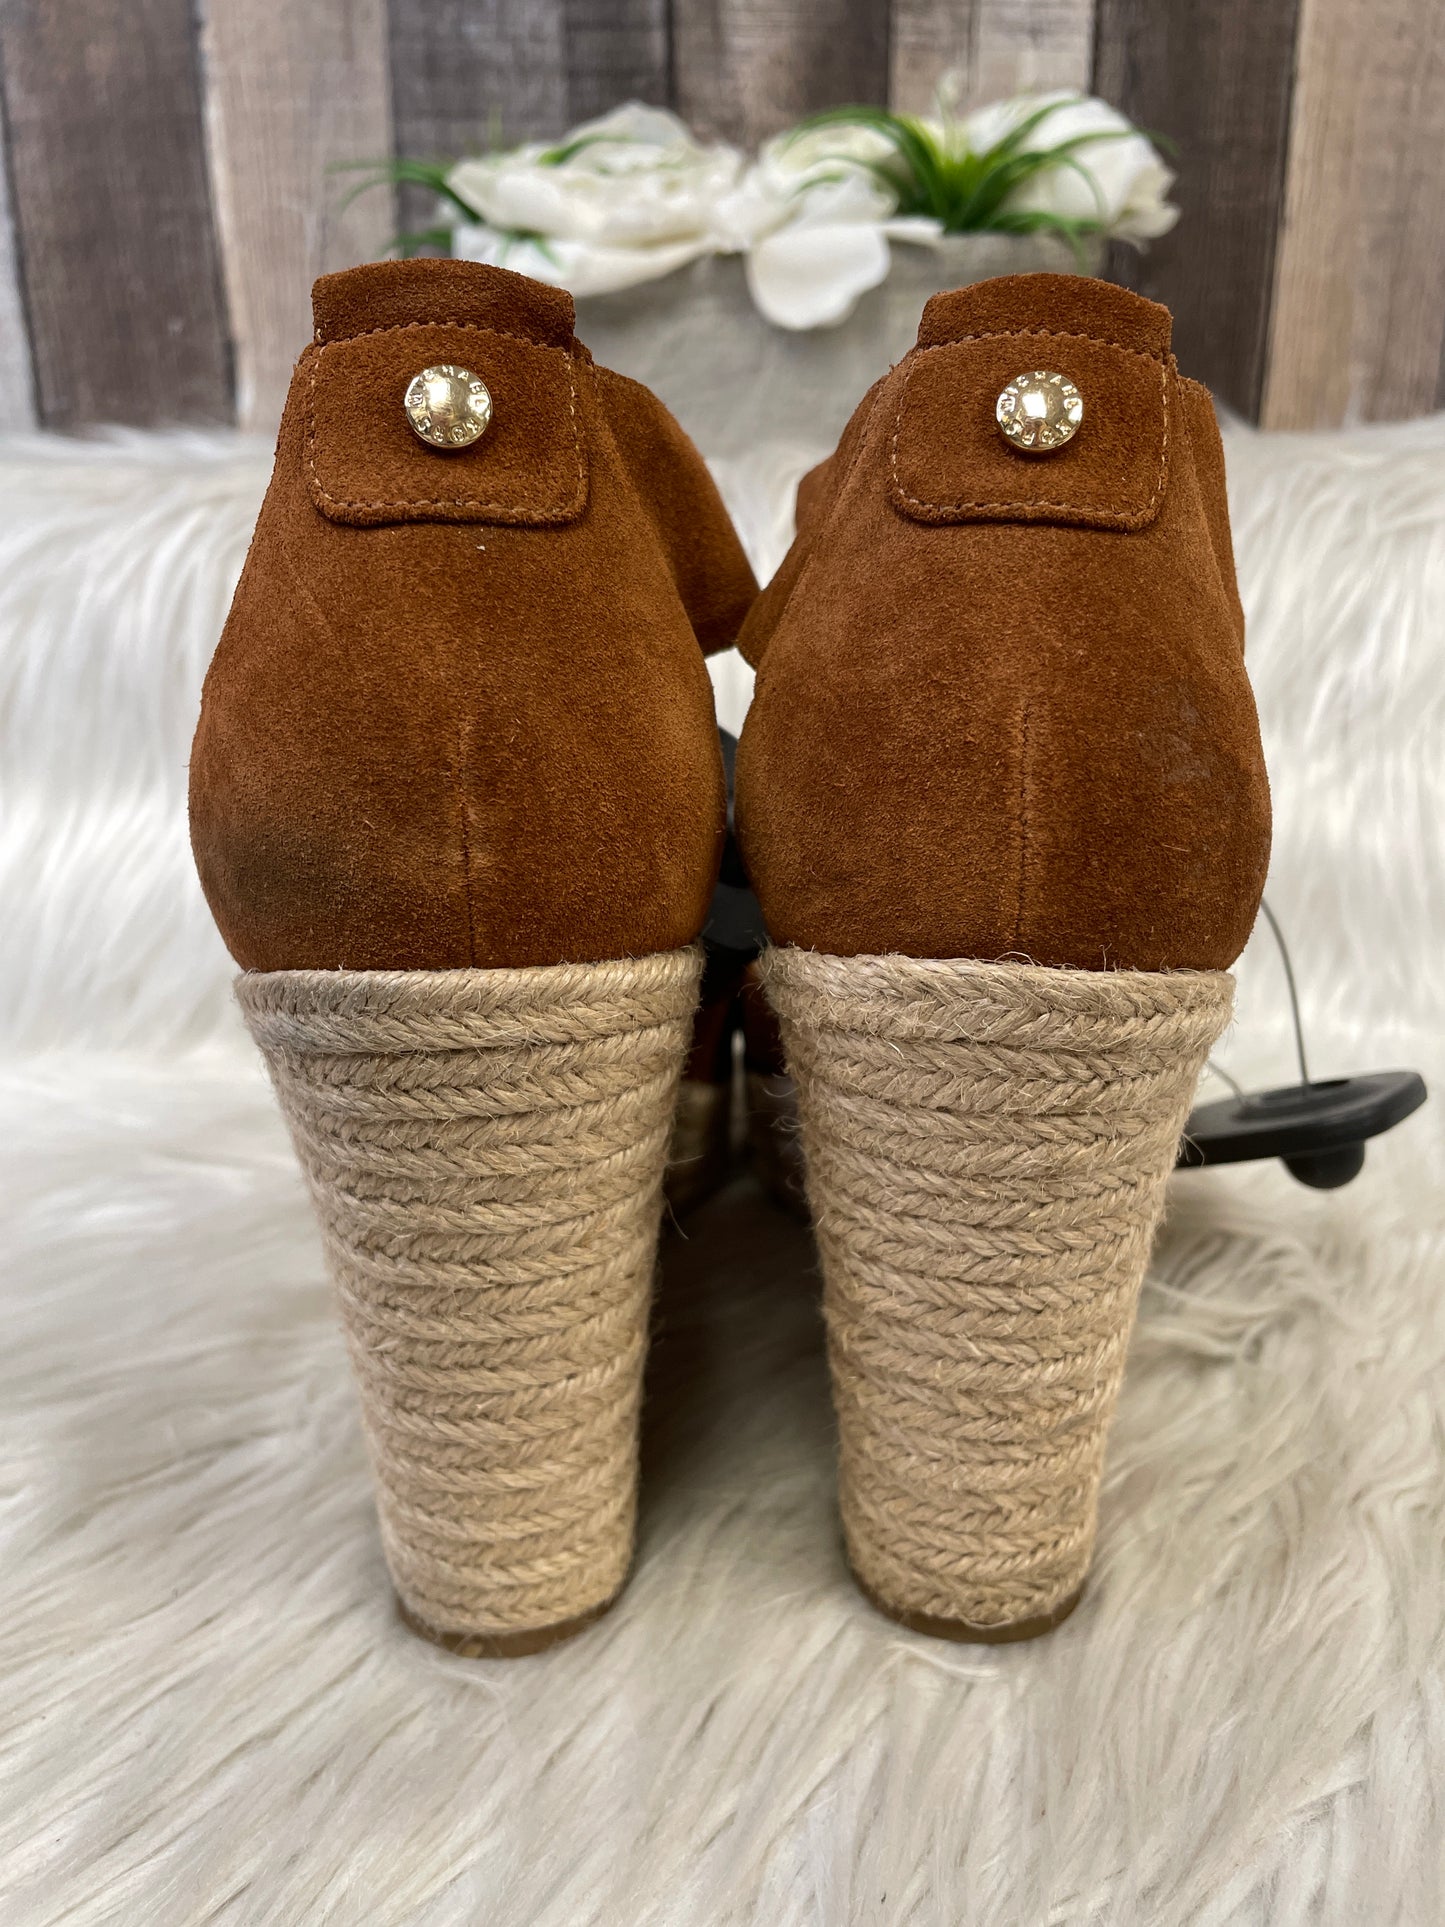 Sandals Heels Wedge By Michael Kors  Size: 9.5